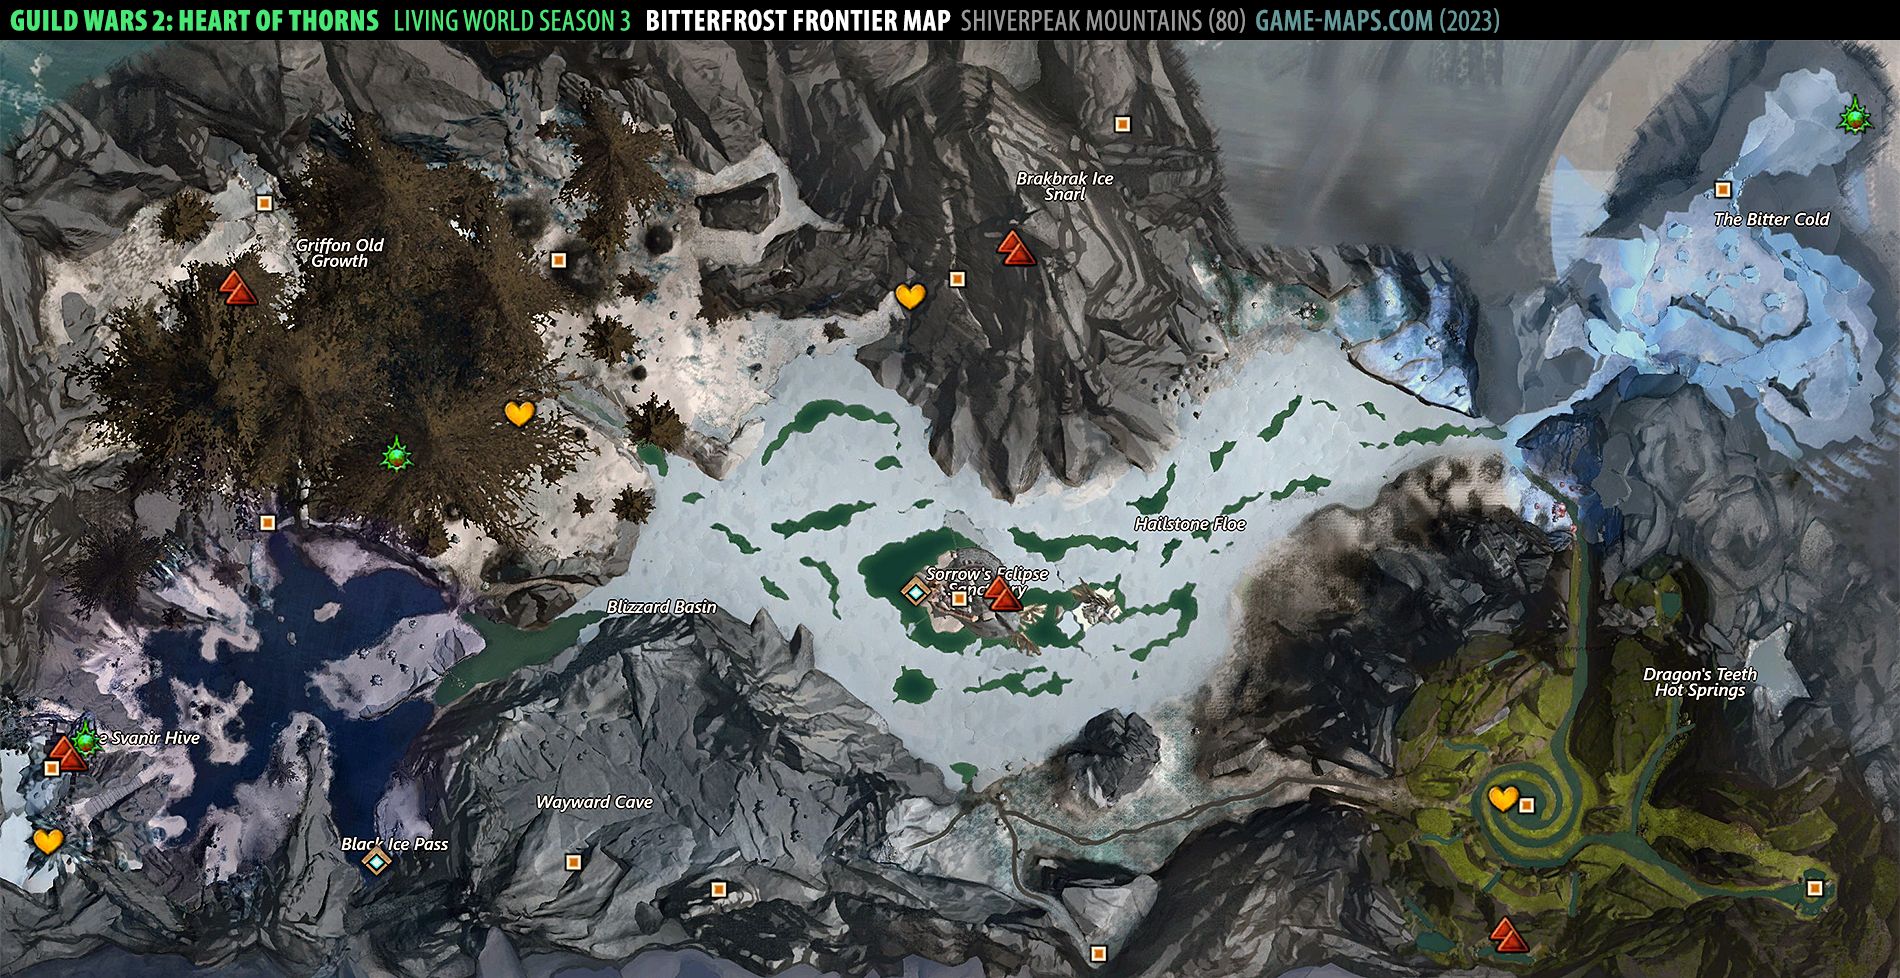 Bitterfrost Frontier Map Guild Wars 2